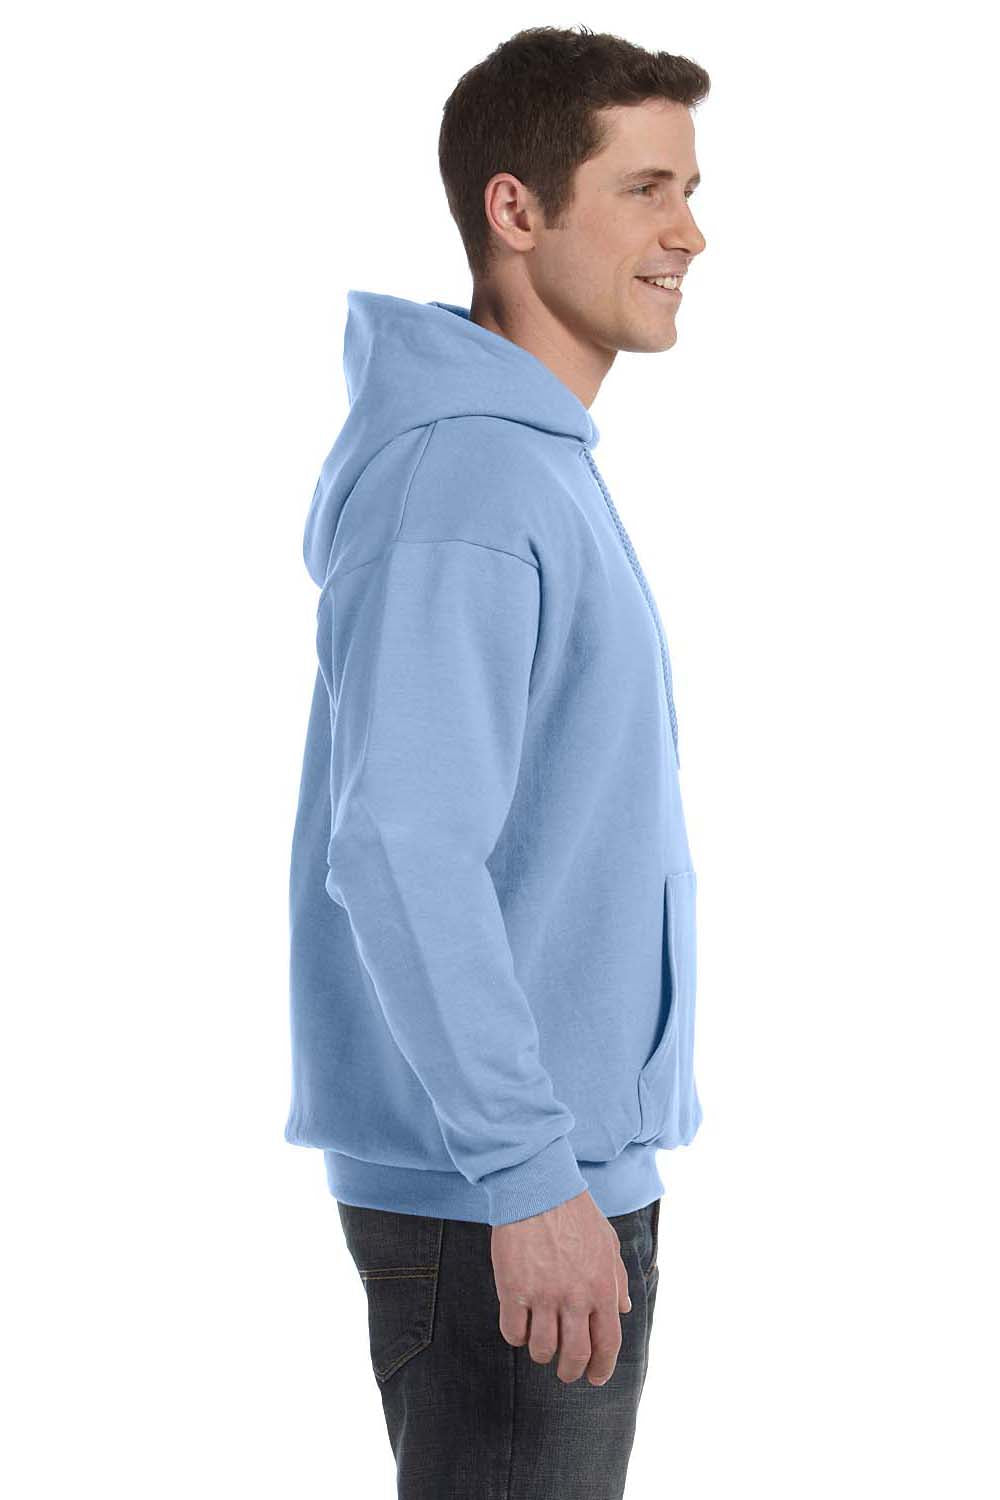 Hanes P170 Mens EcoSmart Print Pro XP Hooded Sweatshirt Hoodie Light Blue Side